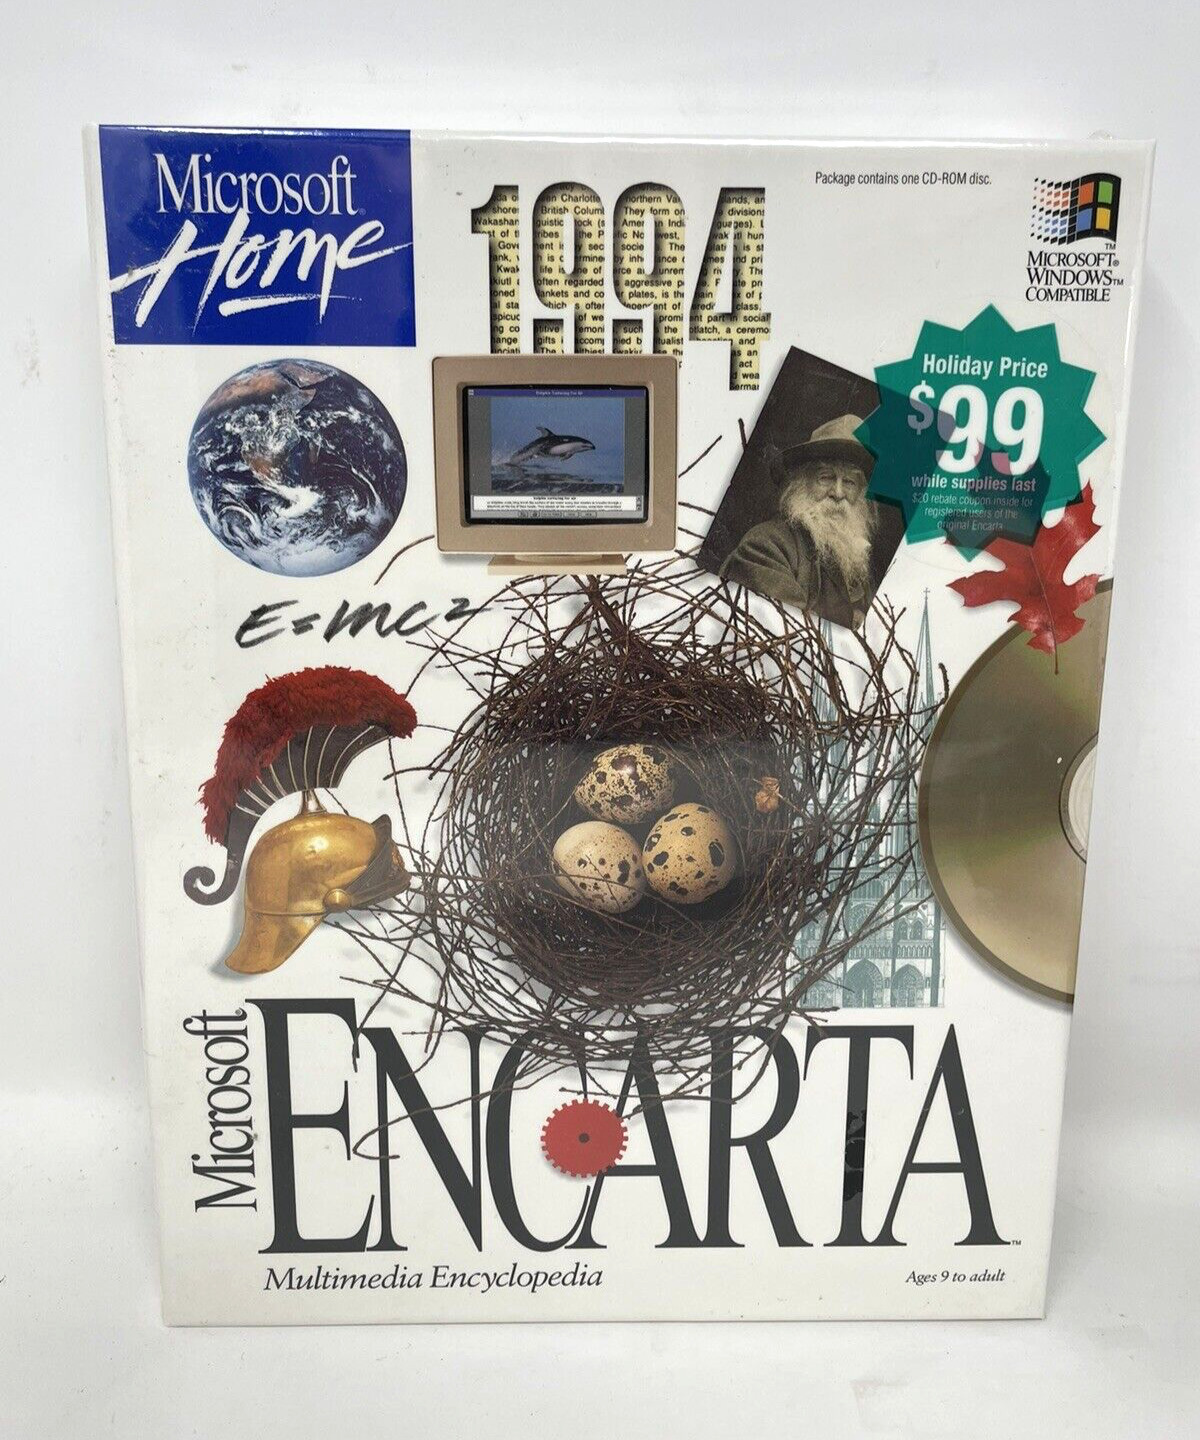 Microsoft Encarta Encyclopedia 1994 Sealed New Rare Vintage PC CD-ROM Software